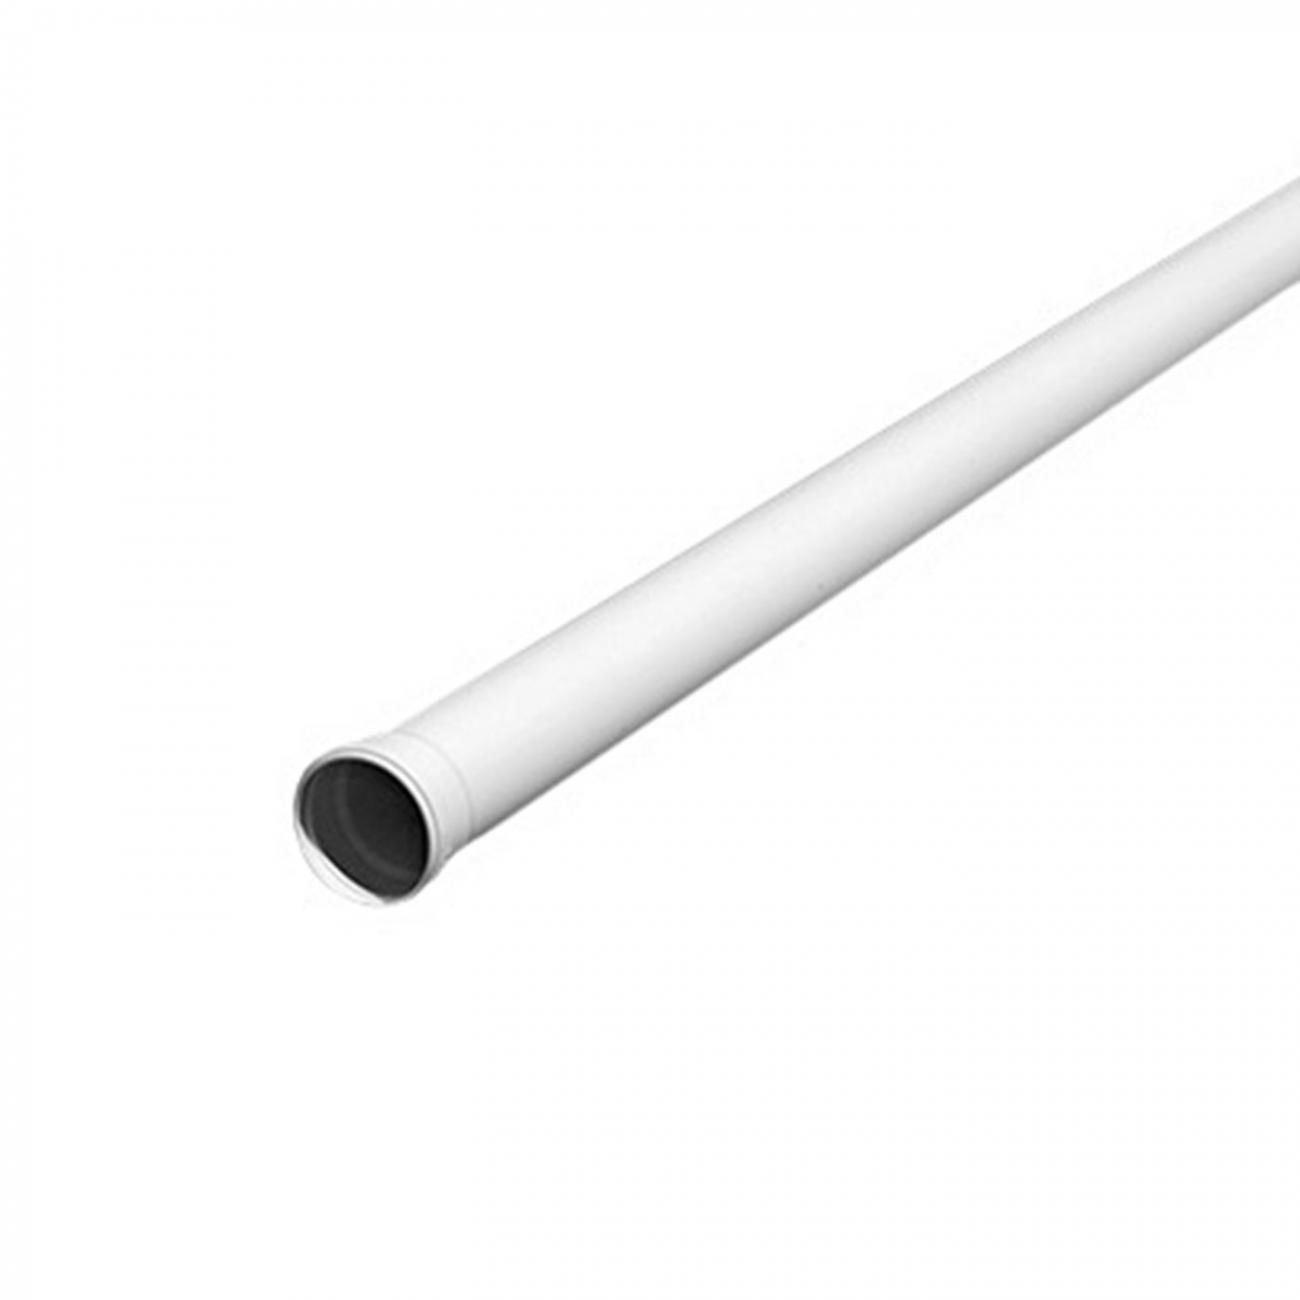 TUBO PVC SANITARIO REFORZADO CxE 110 mm (4 PLG) – Estruktura1242